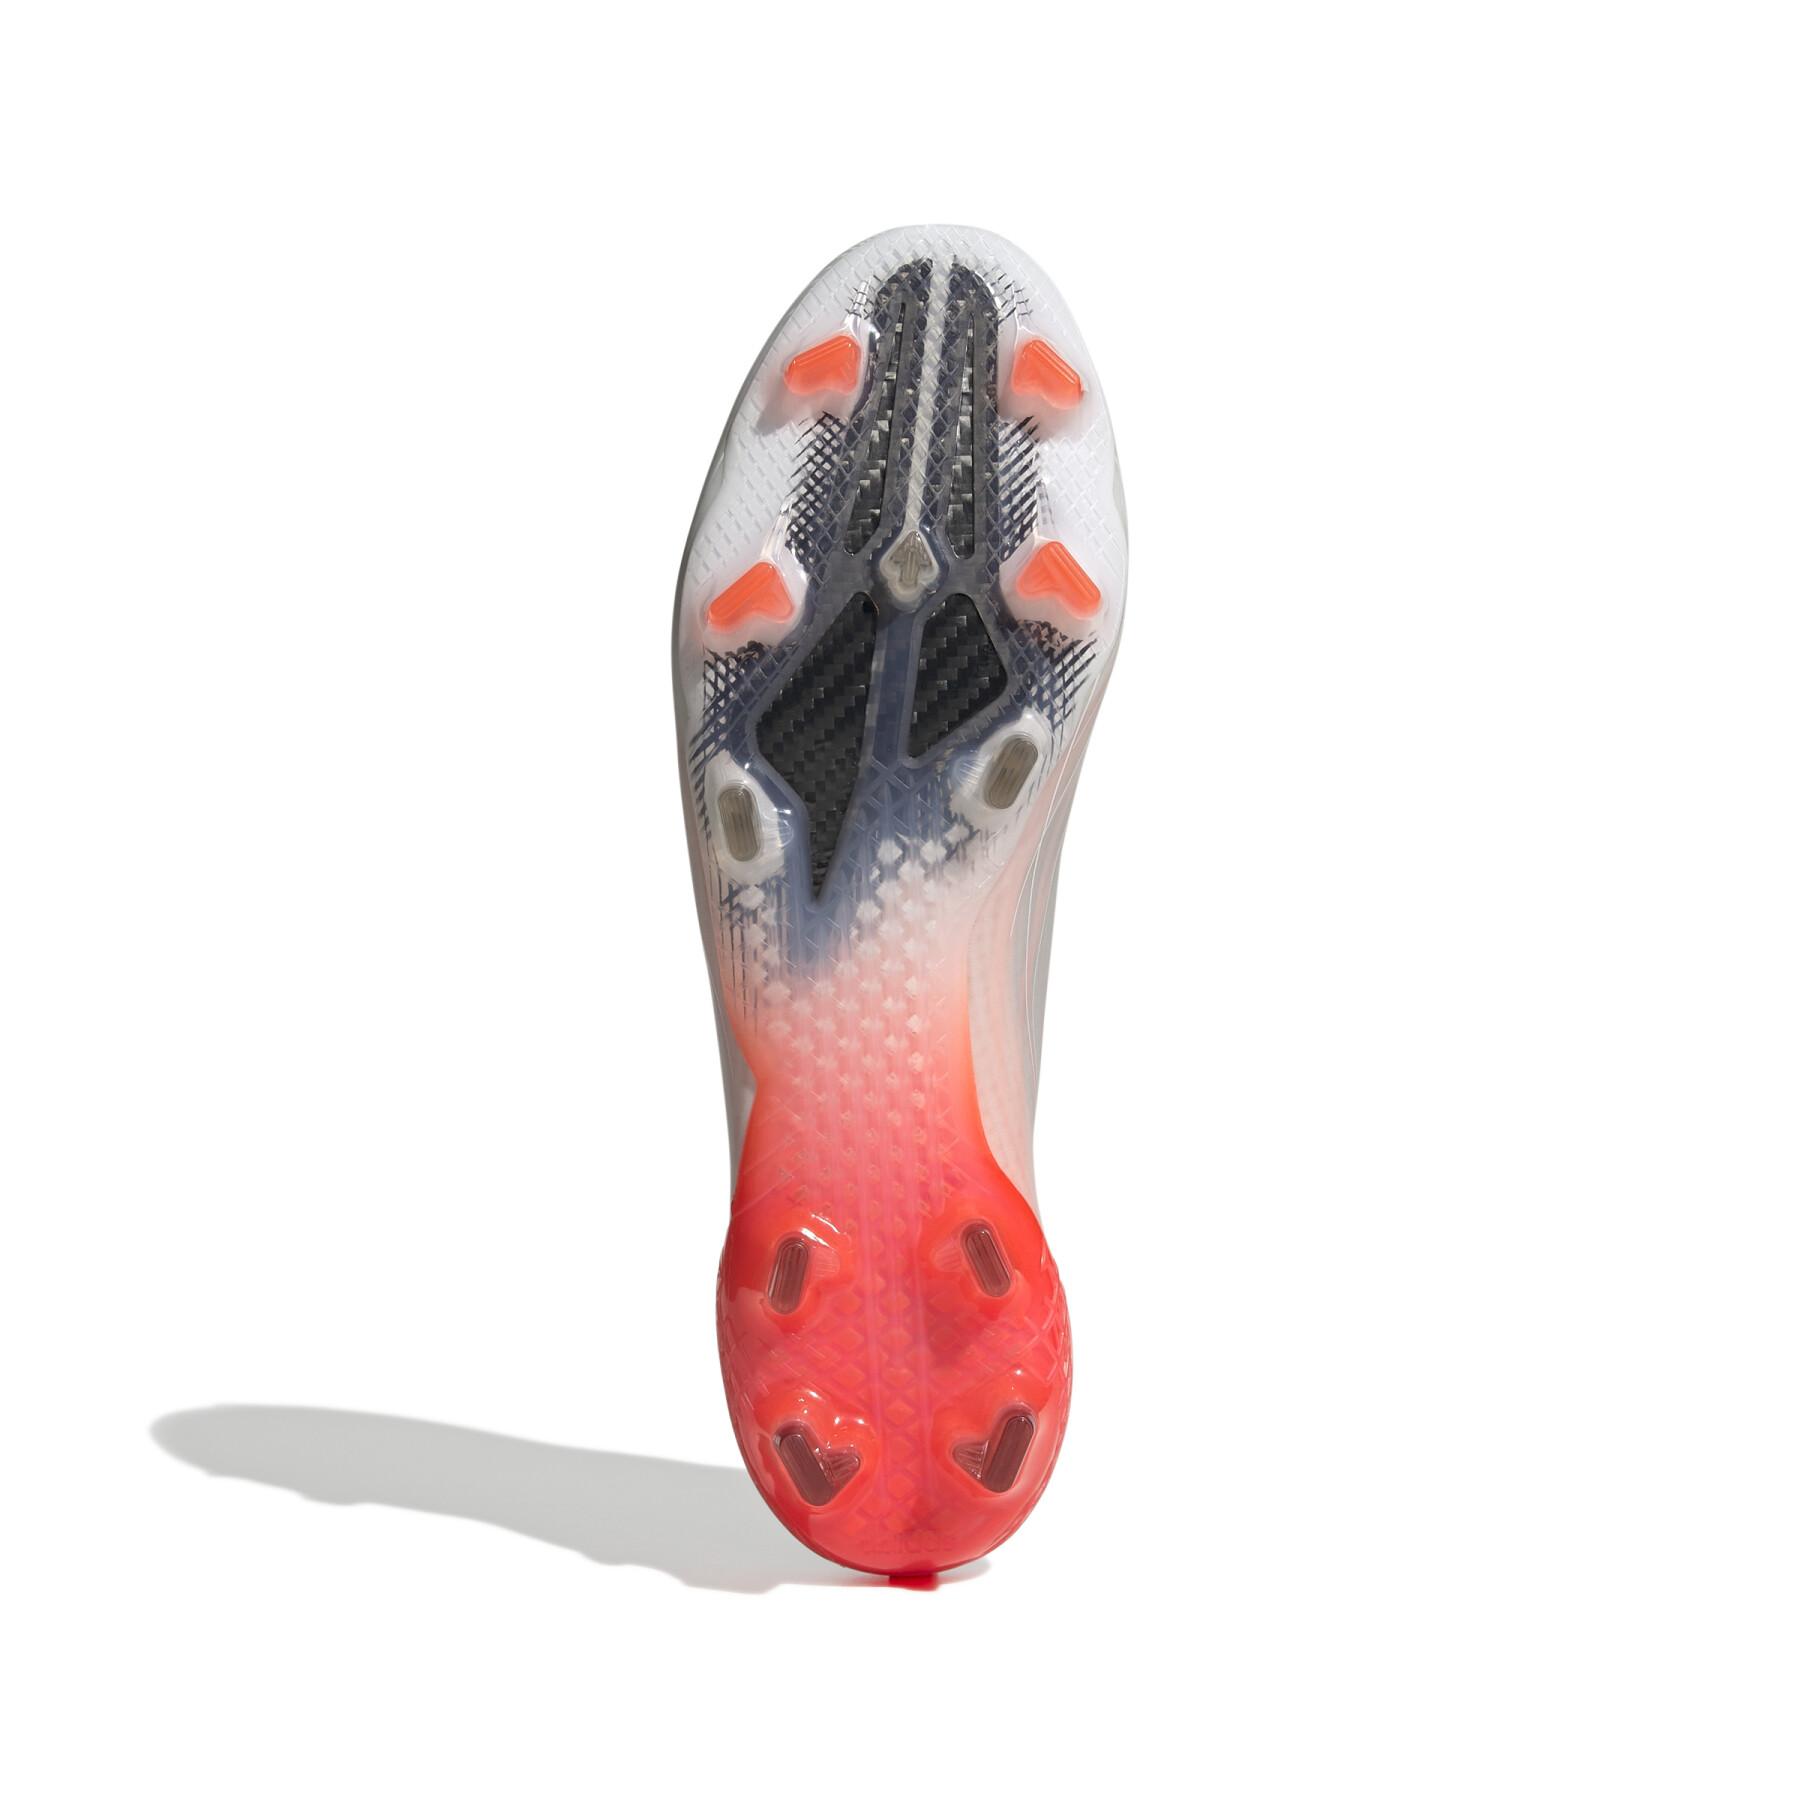 Soccer shoes adidas X Speedflow.1 FG - Whitespark